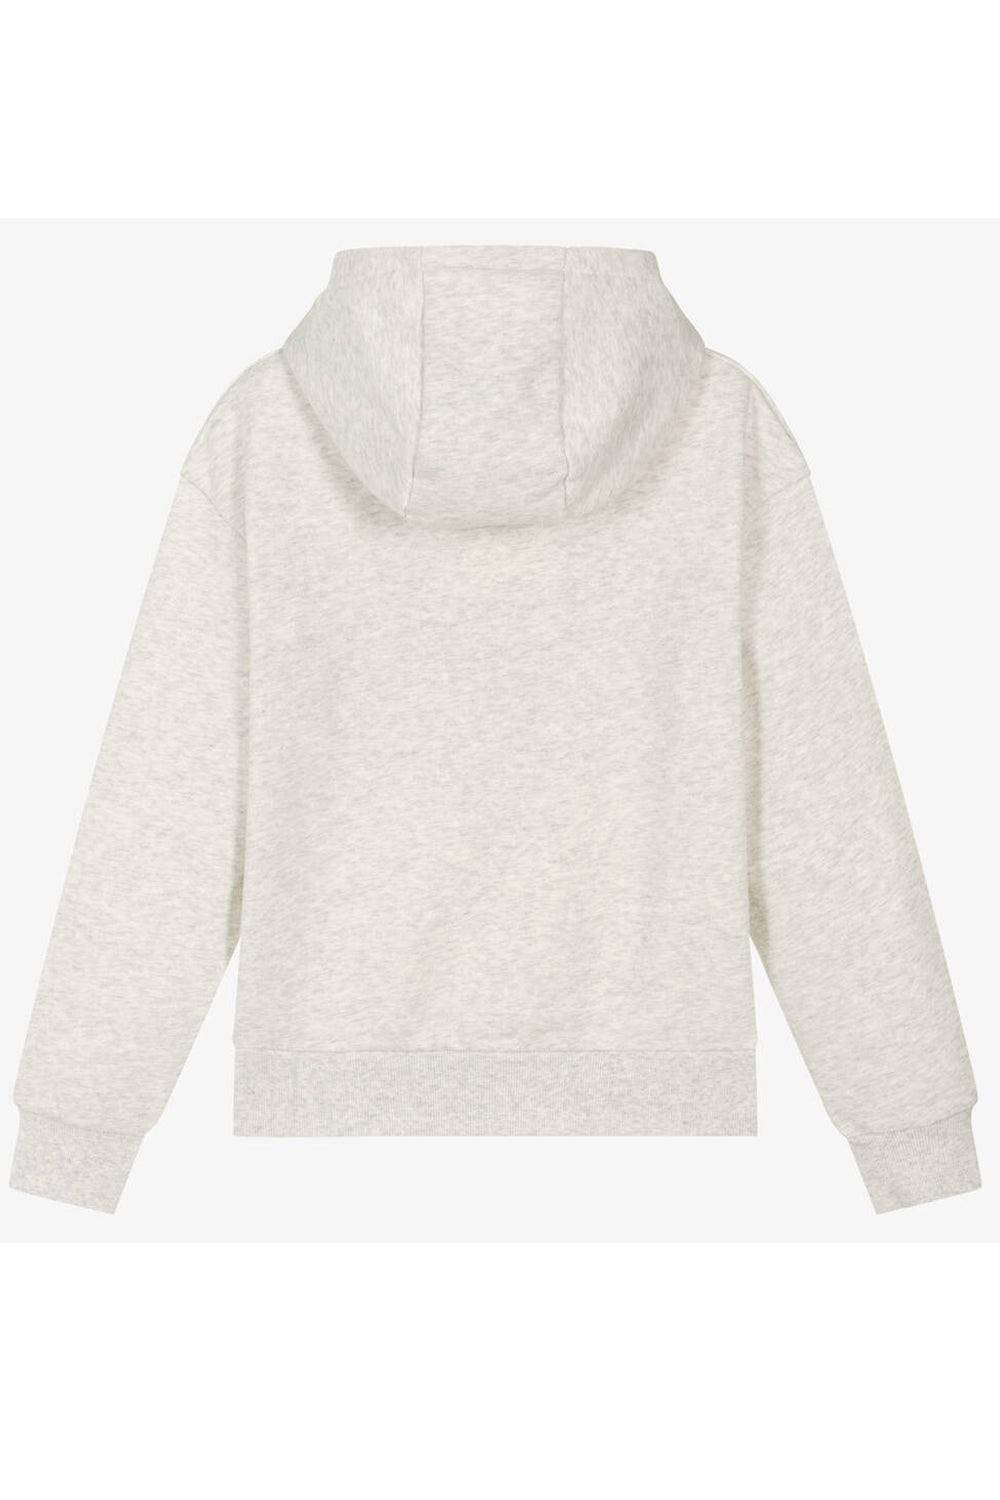 Tiger print Hooded Sweatshirt - Maison7